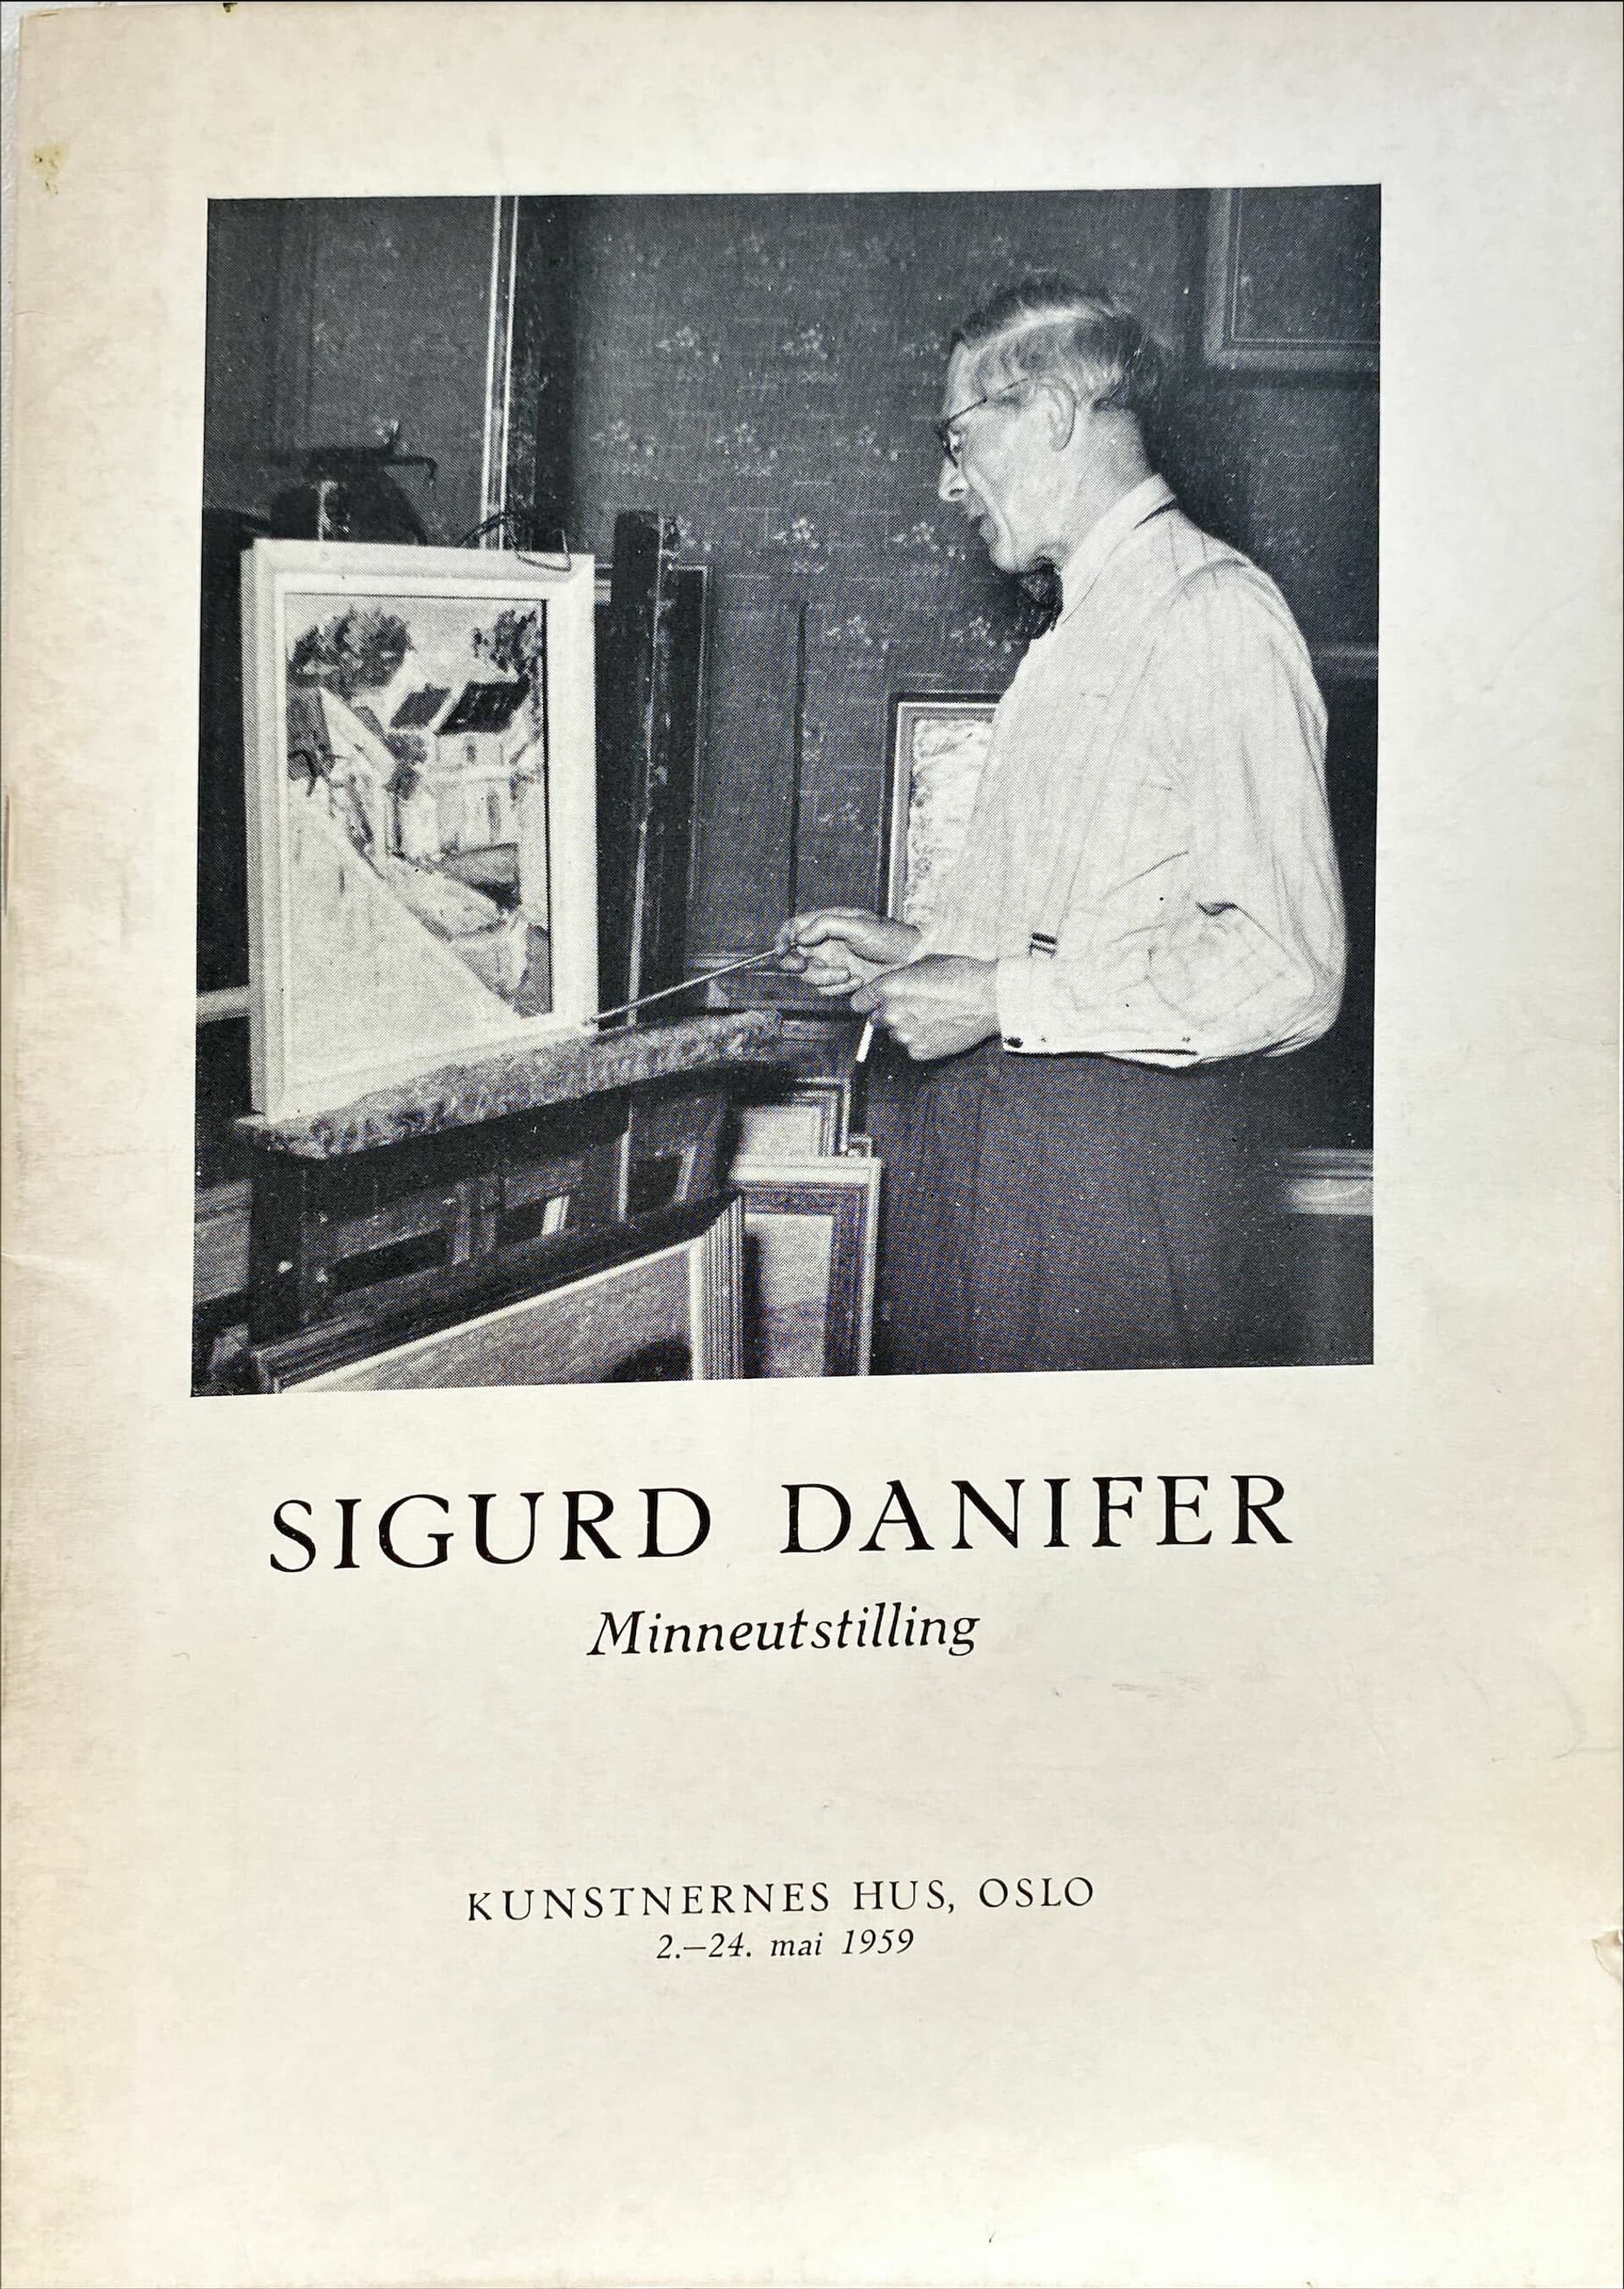 Sigurd danifer